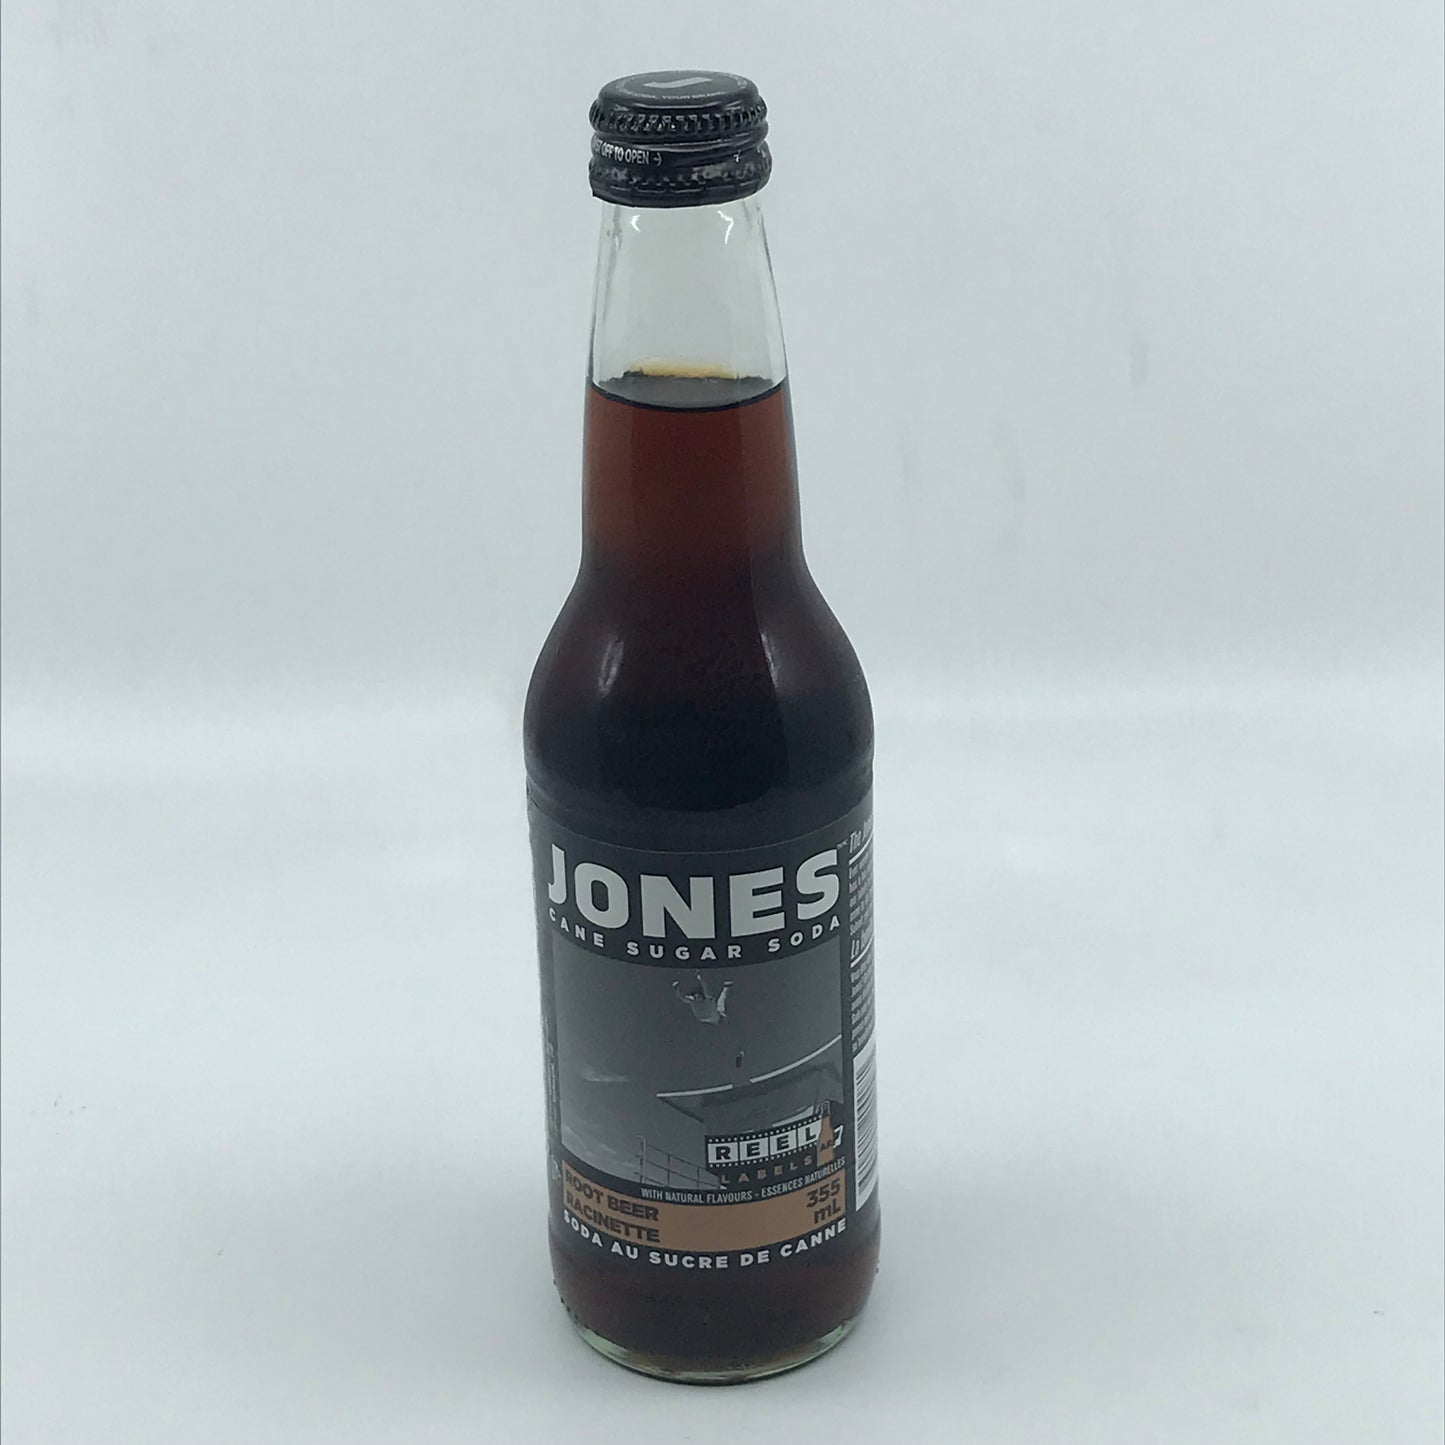 Jones Soda's